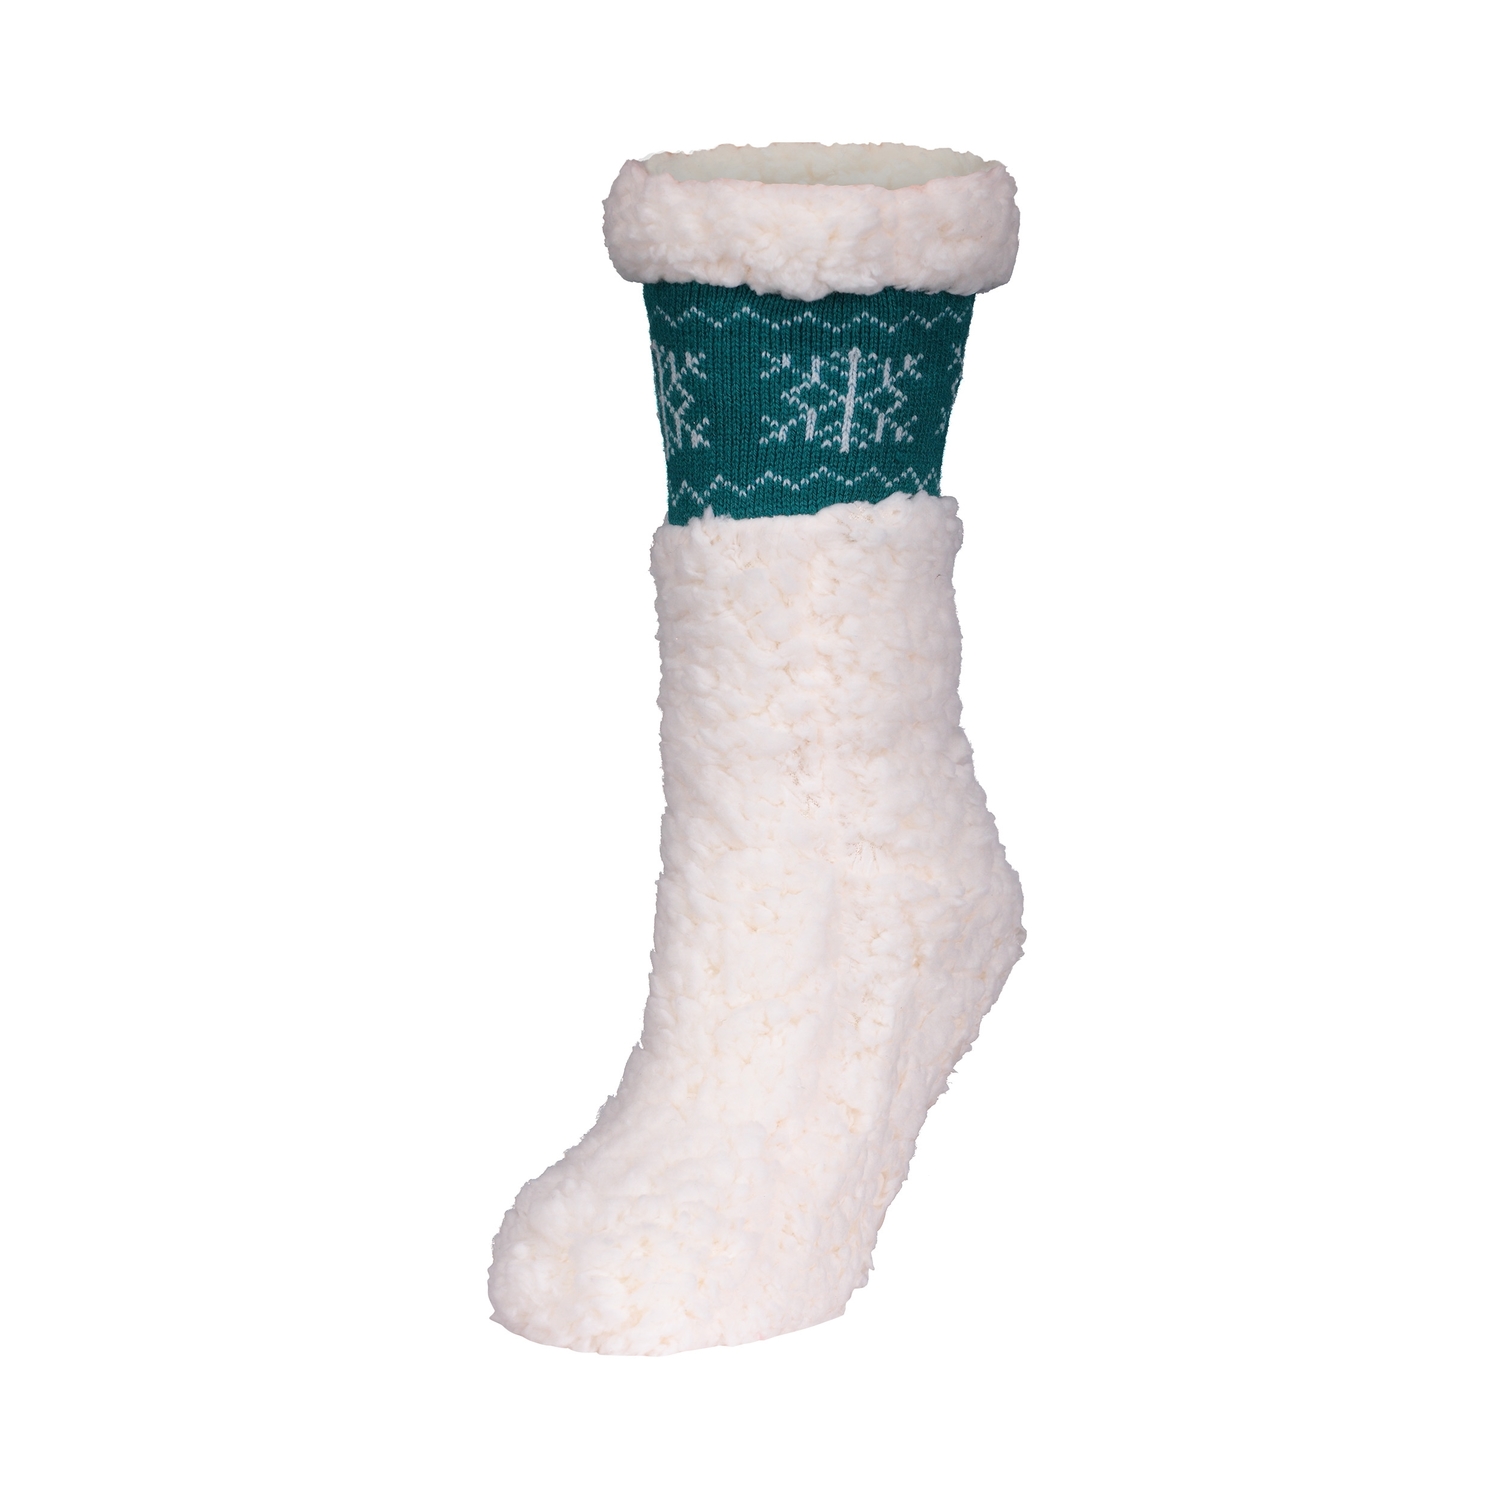 Slippers socks-Acrylic knit-Poly.